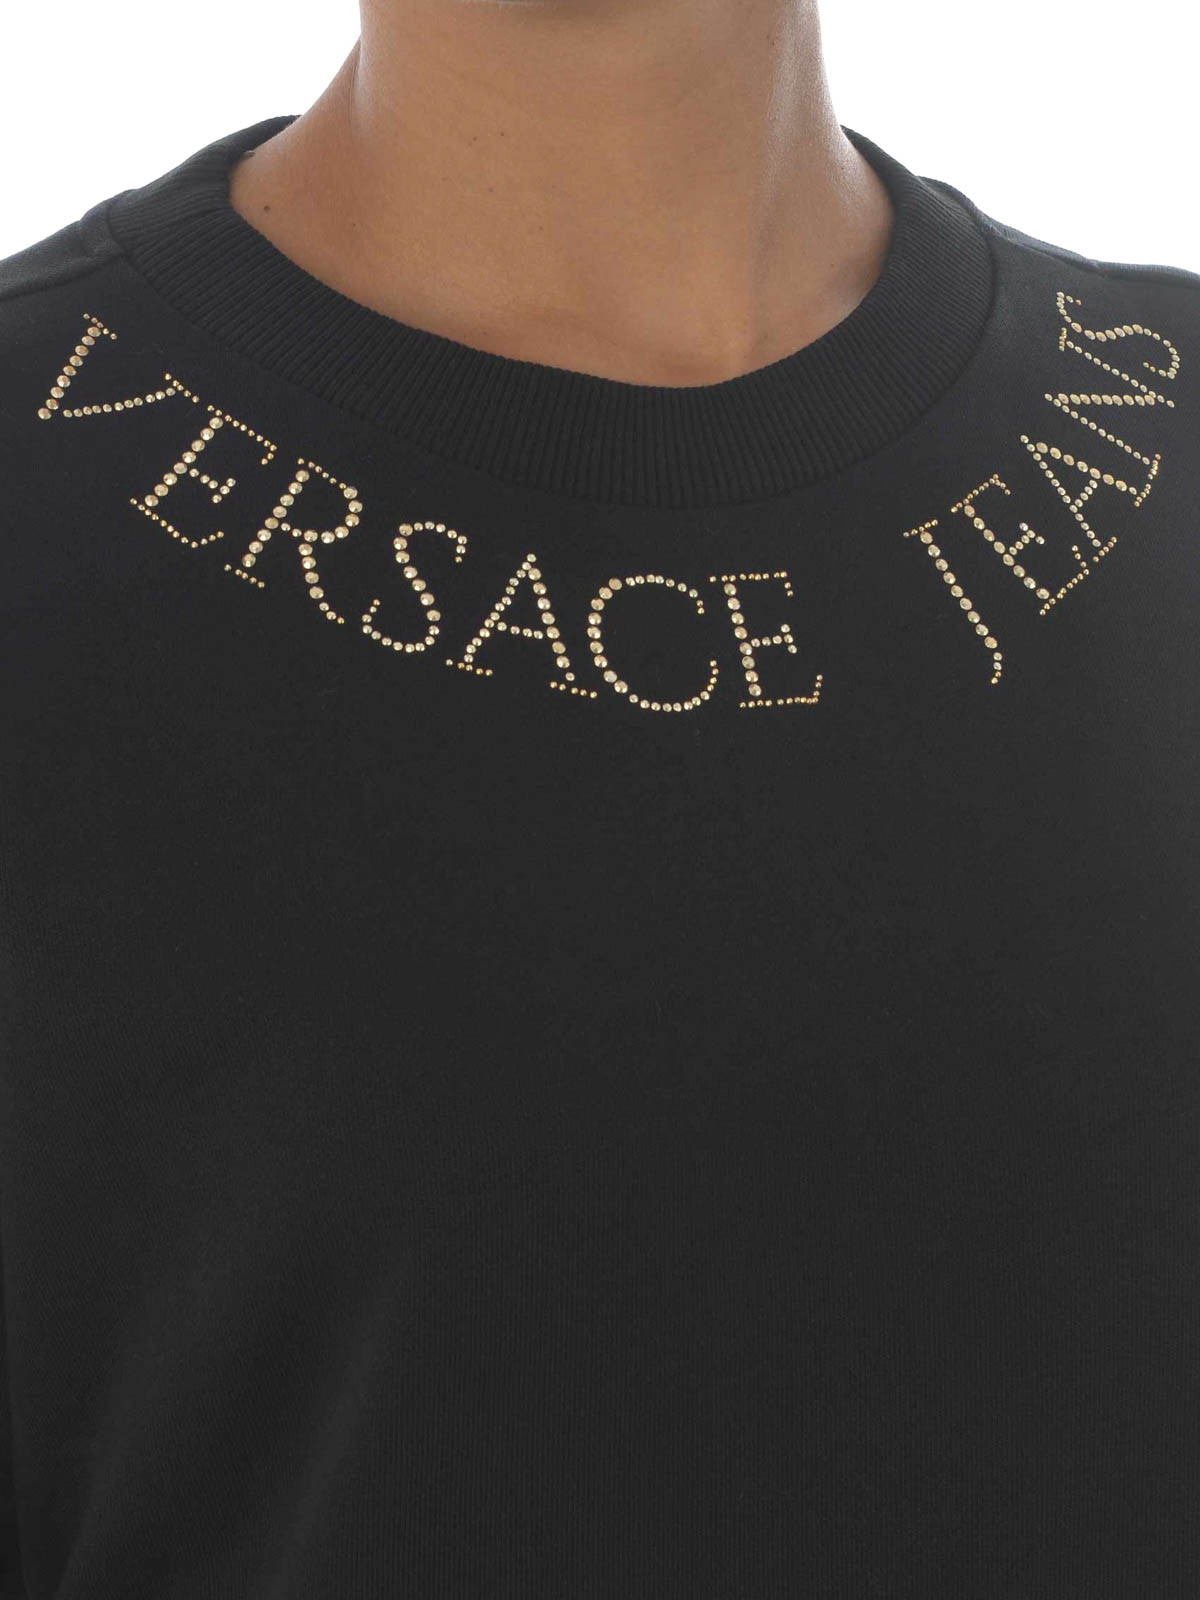 versace jeans black sweatshirt